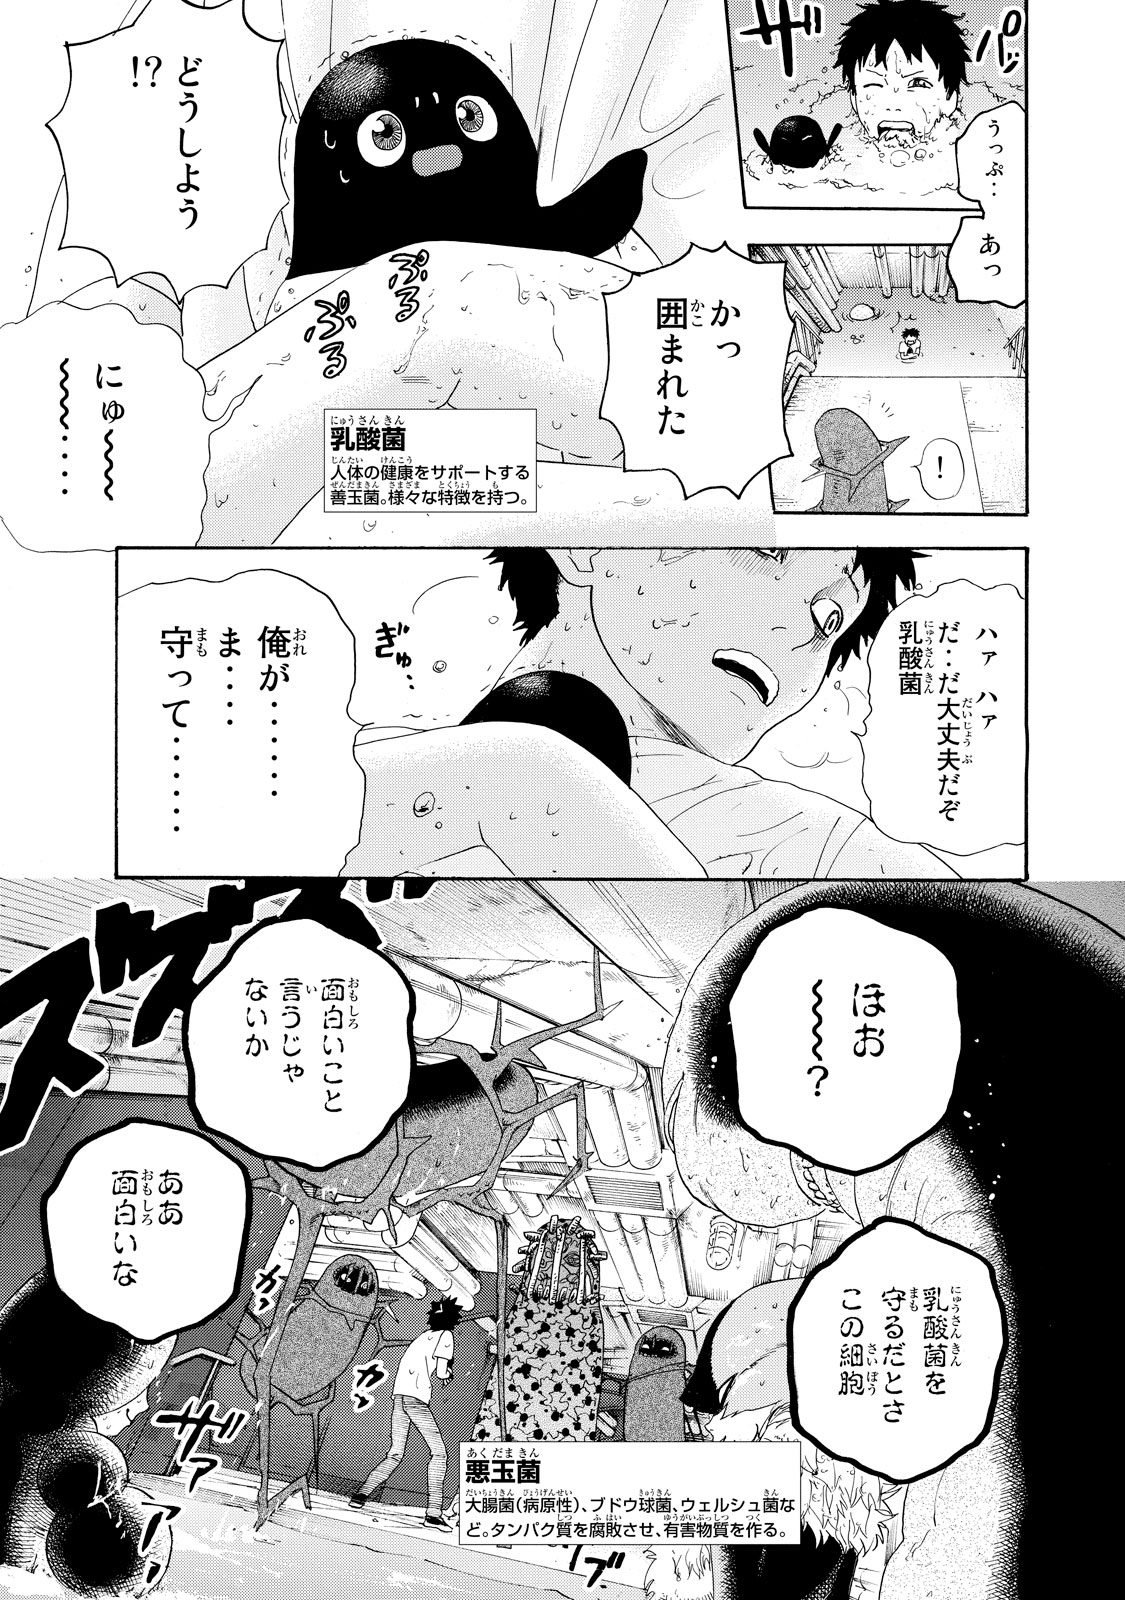 Hataraku Saibou - Chapter 24 - Page 17